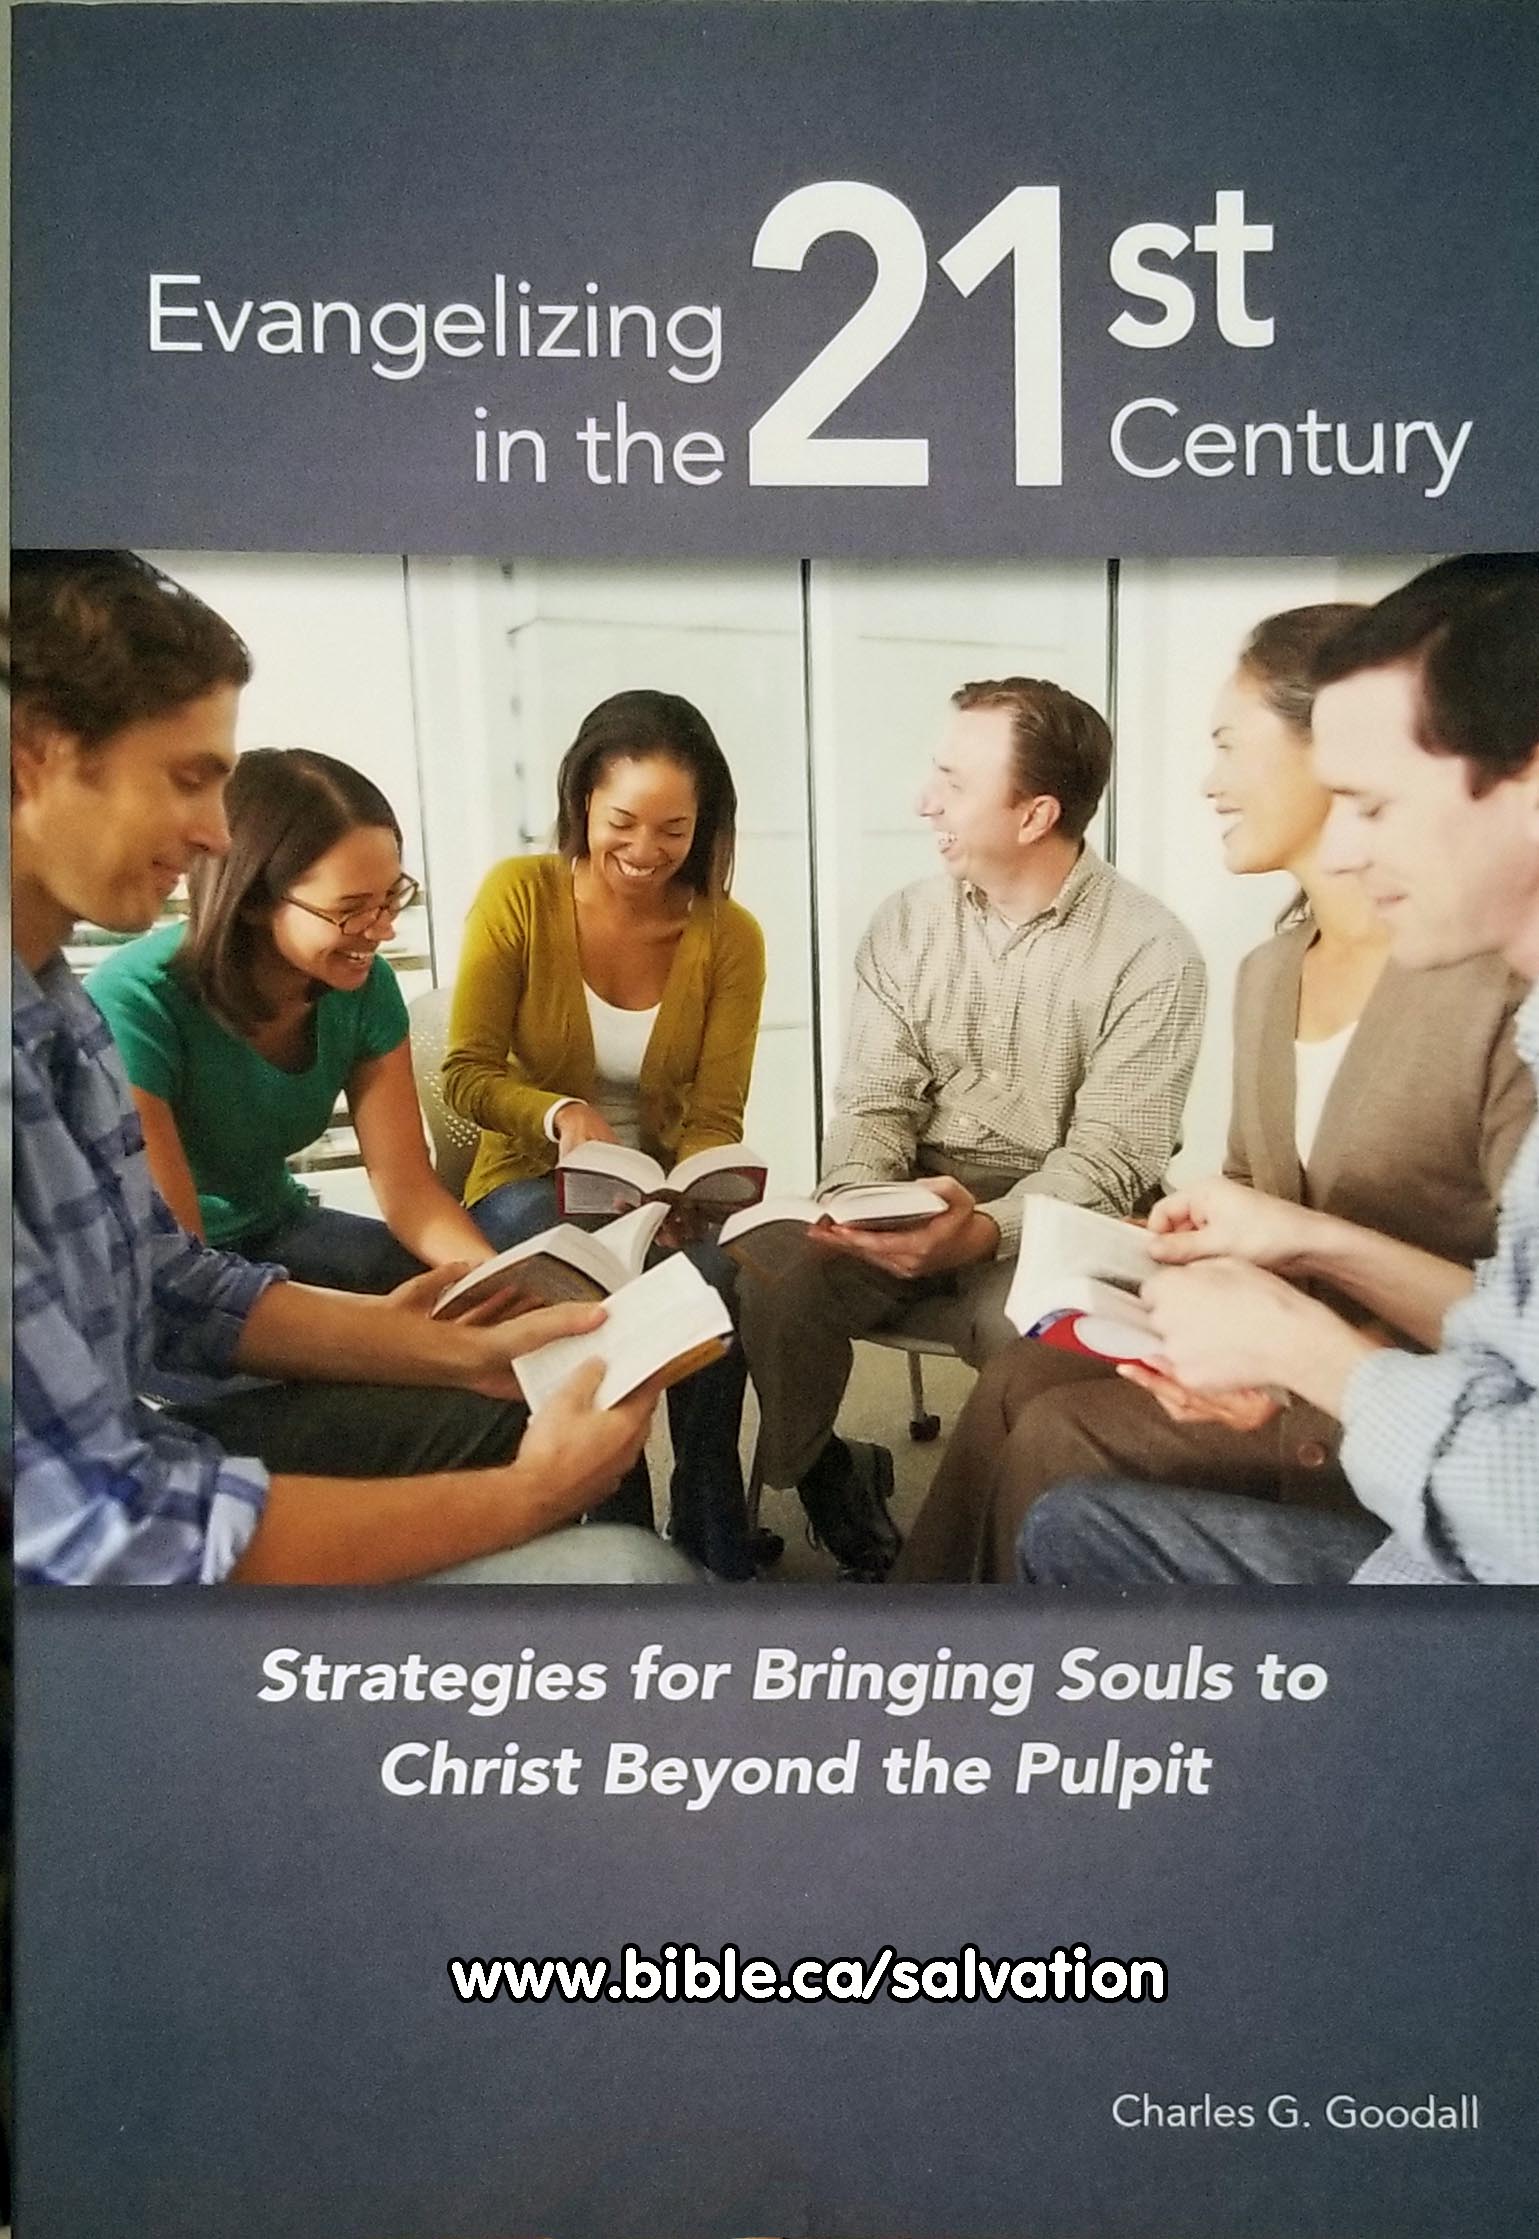 Evangelizing in the 21st century: Charles G. Goodall